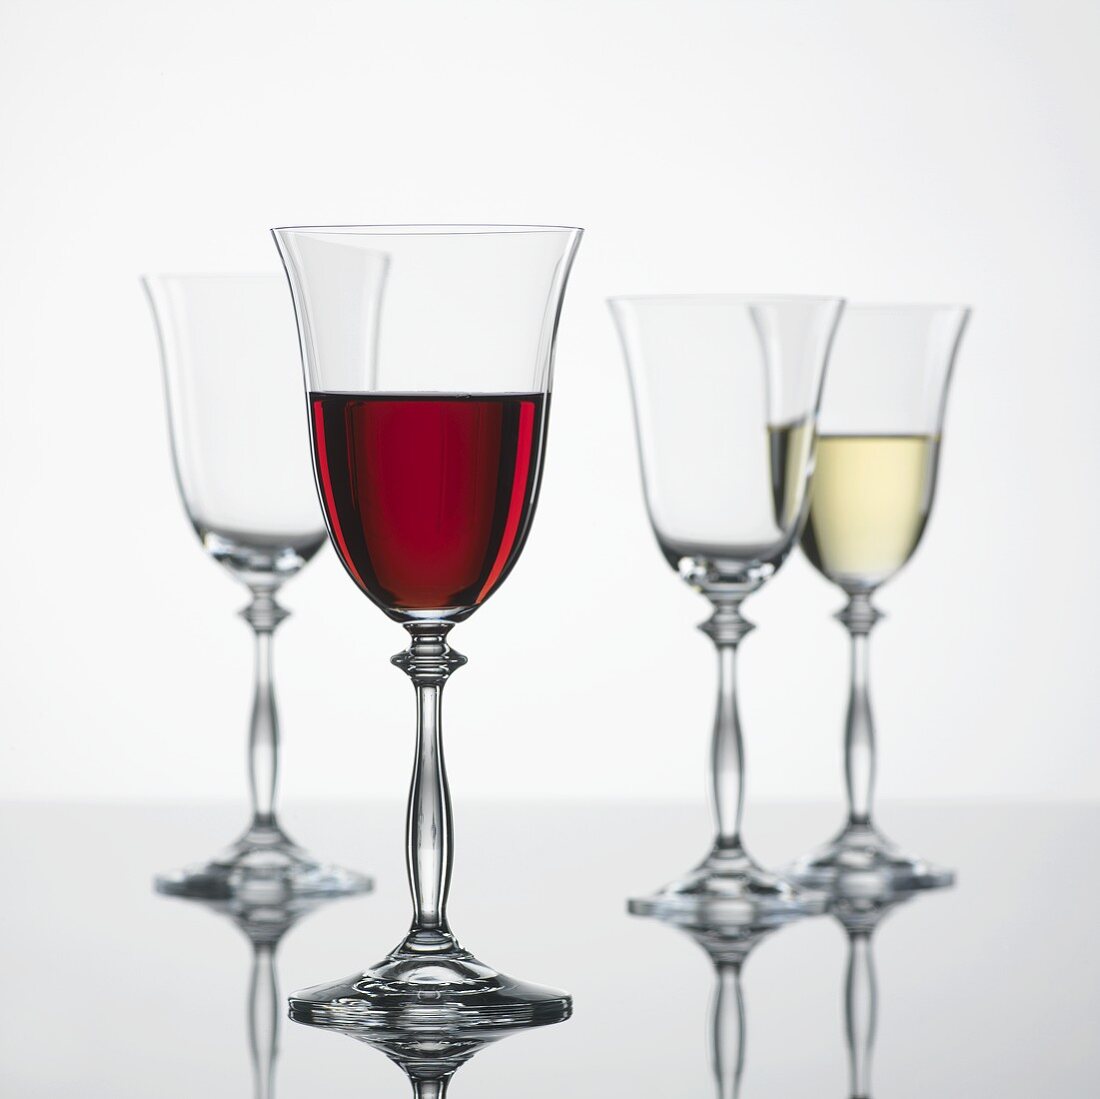 Glass of red wine, glass of white wine & empty wine glasses